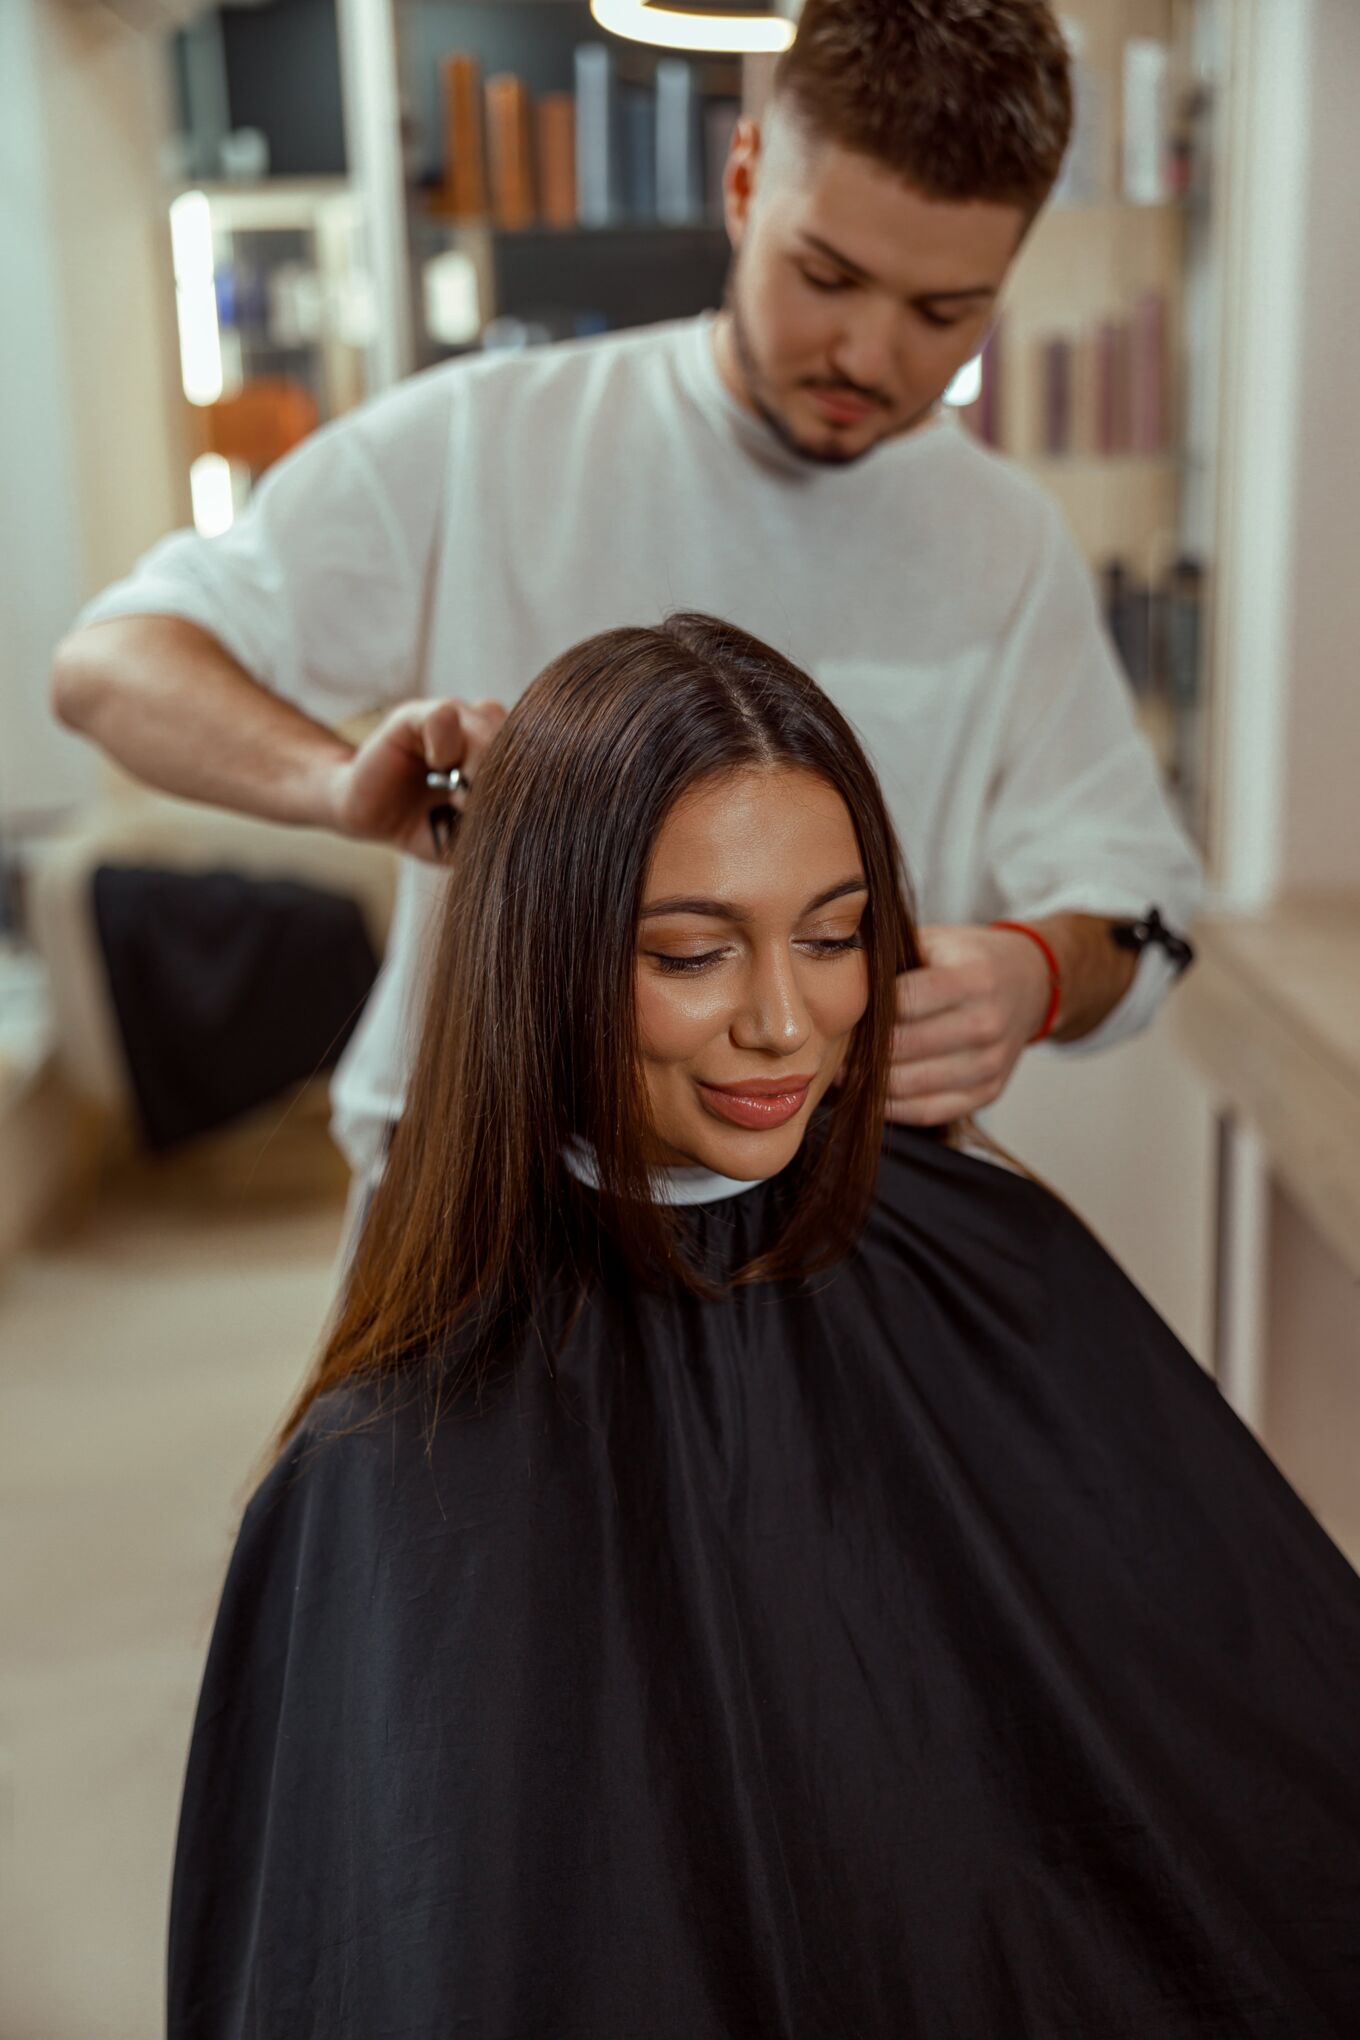 Hair Salon Rules for Clients